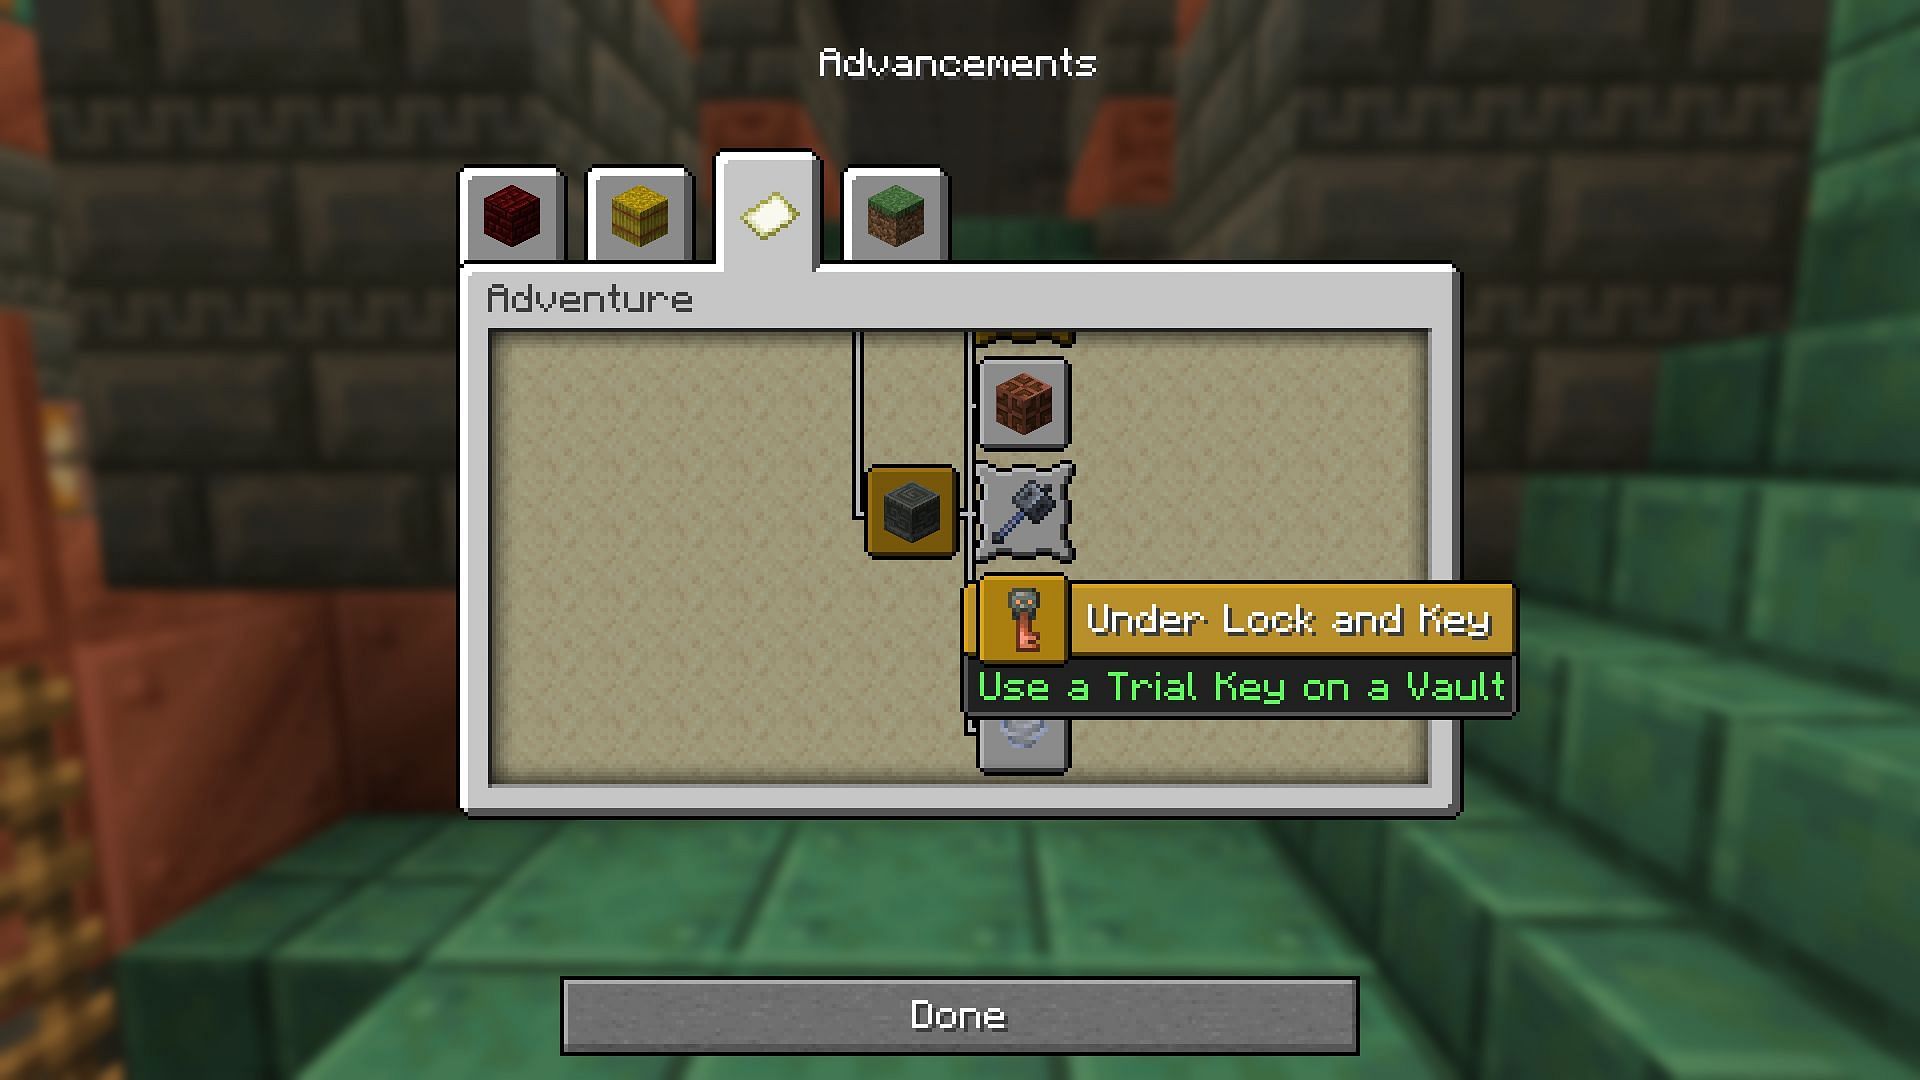 Under Lock and Key advancement&#039;s description in Minecraft (Image via Mojang)